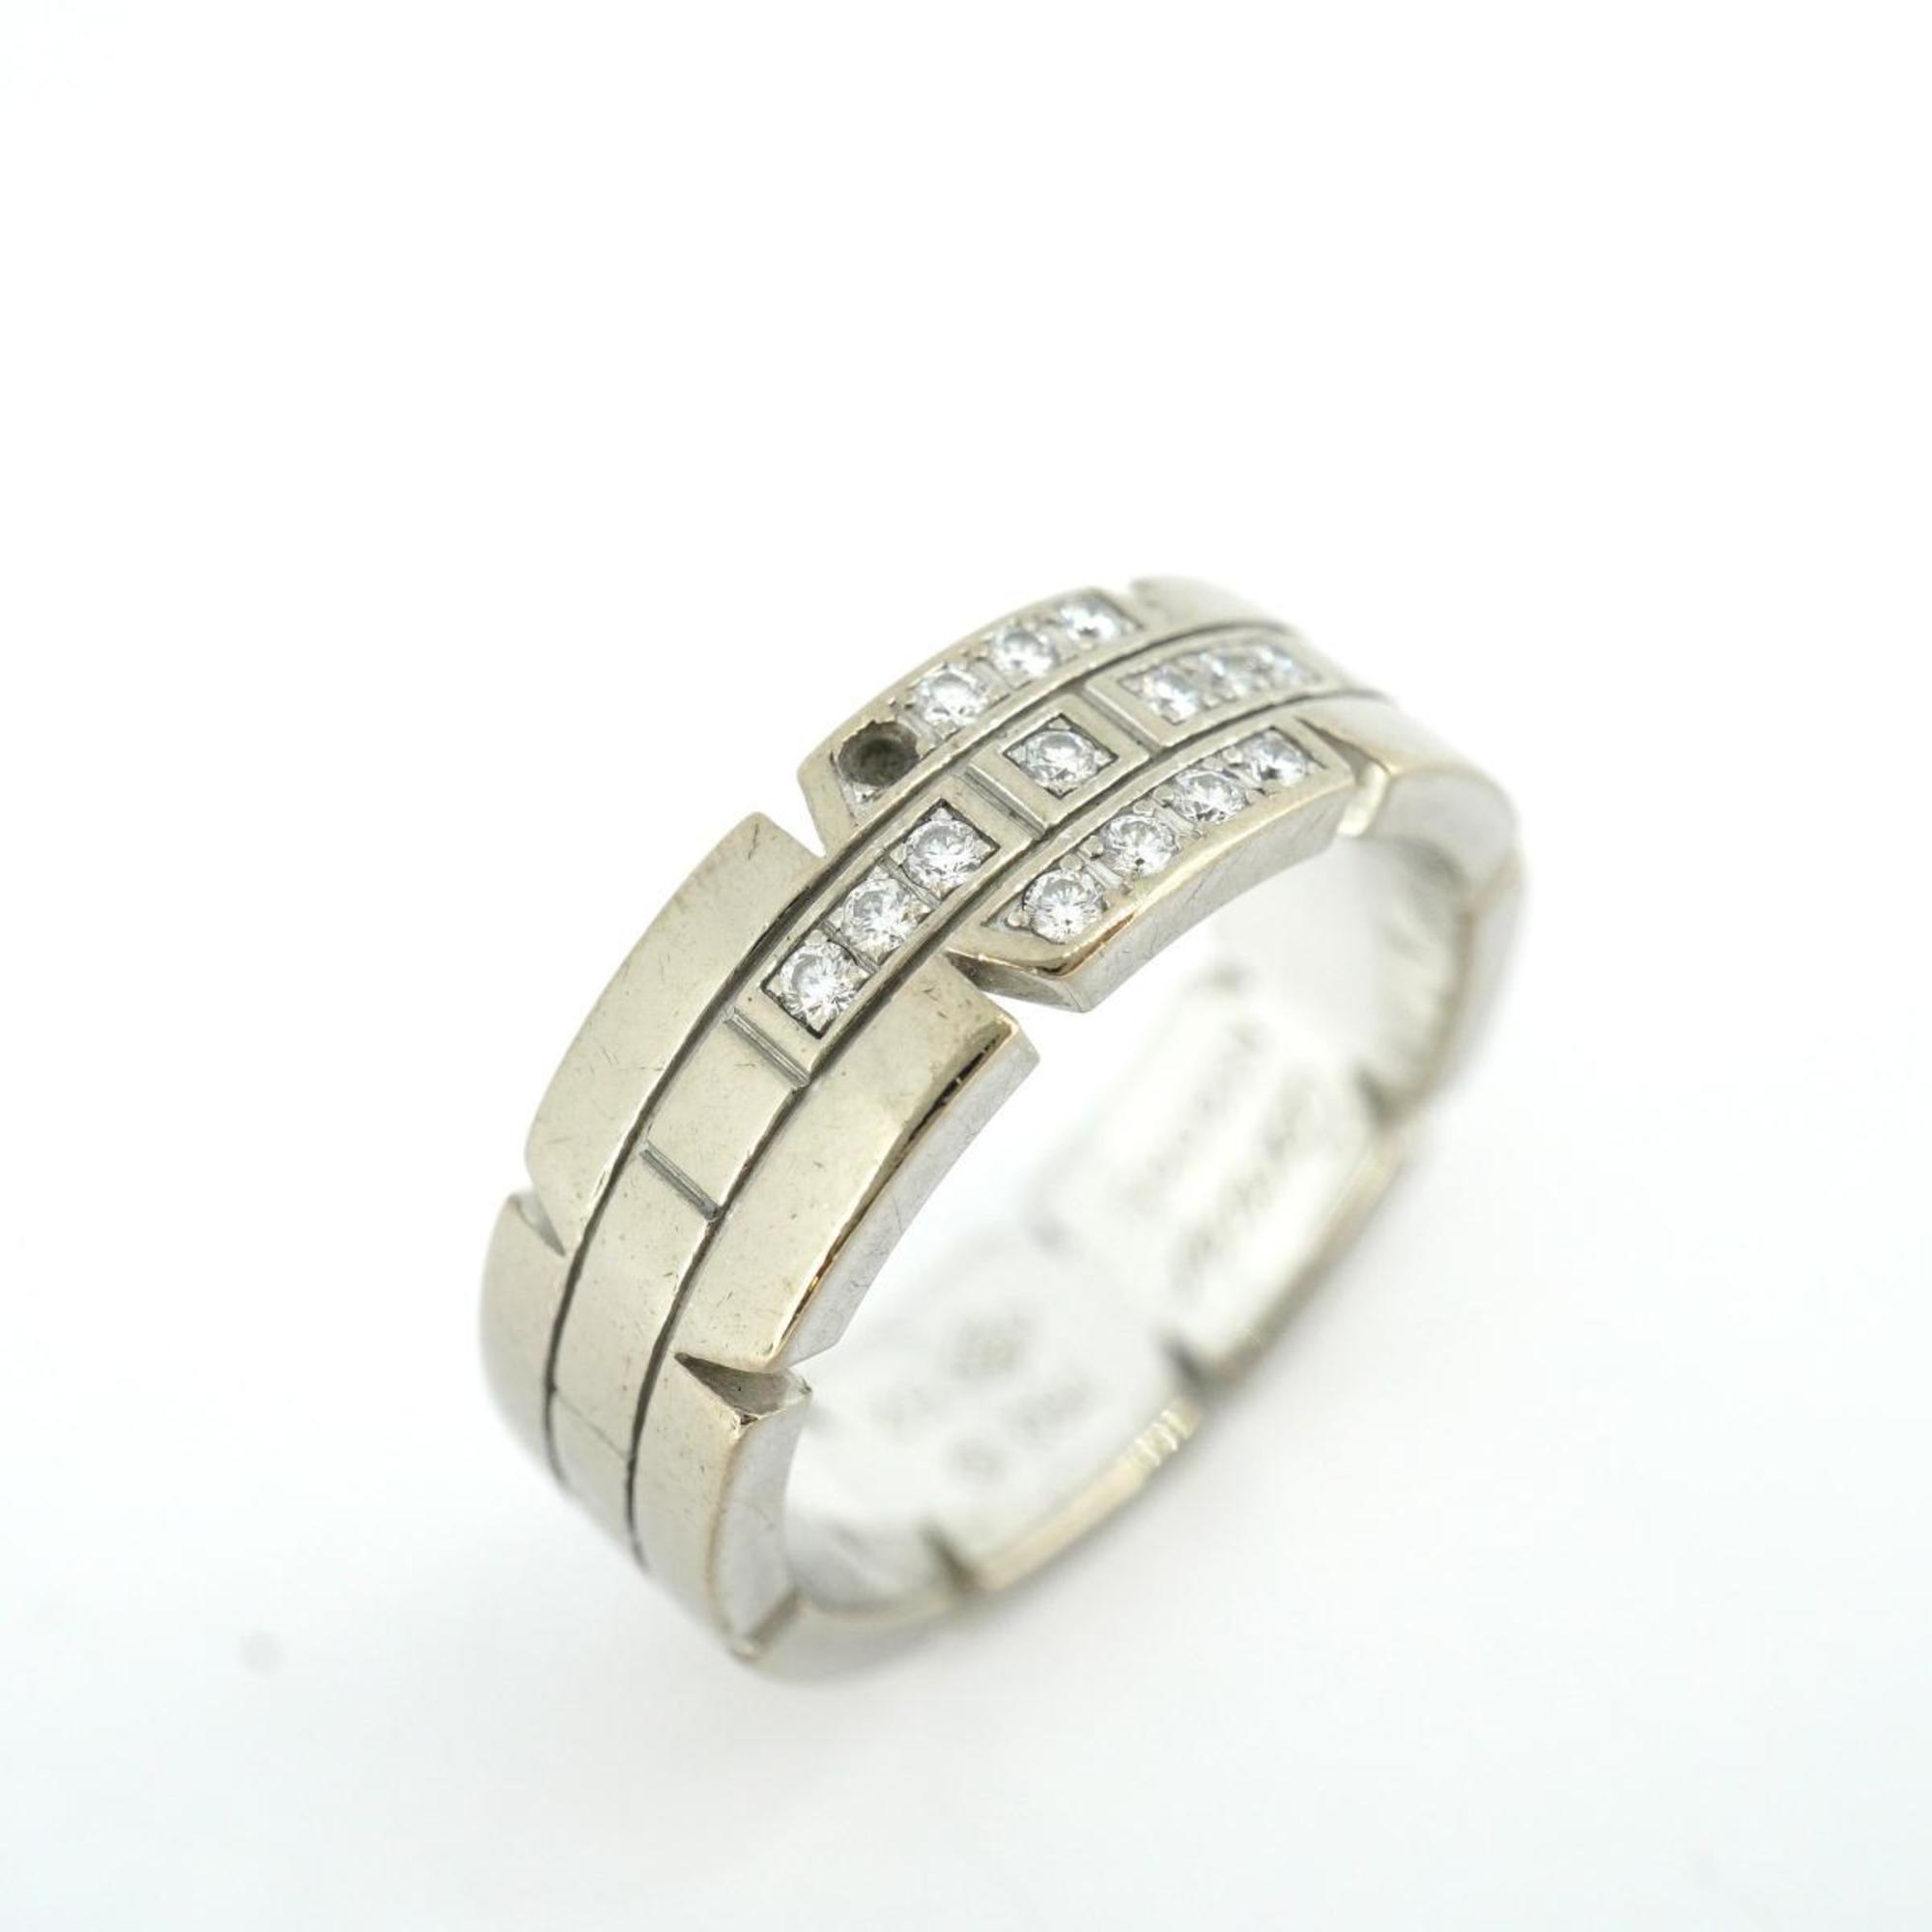 Cartier Tank Francaise Diamond Ring K18WG White Gold Ladies